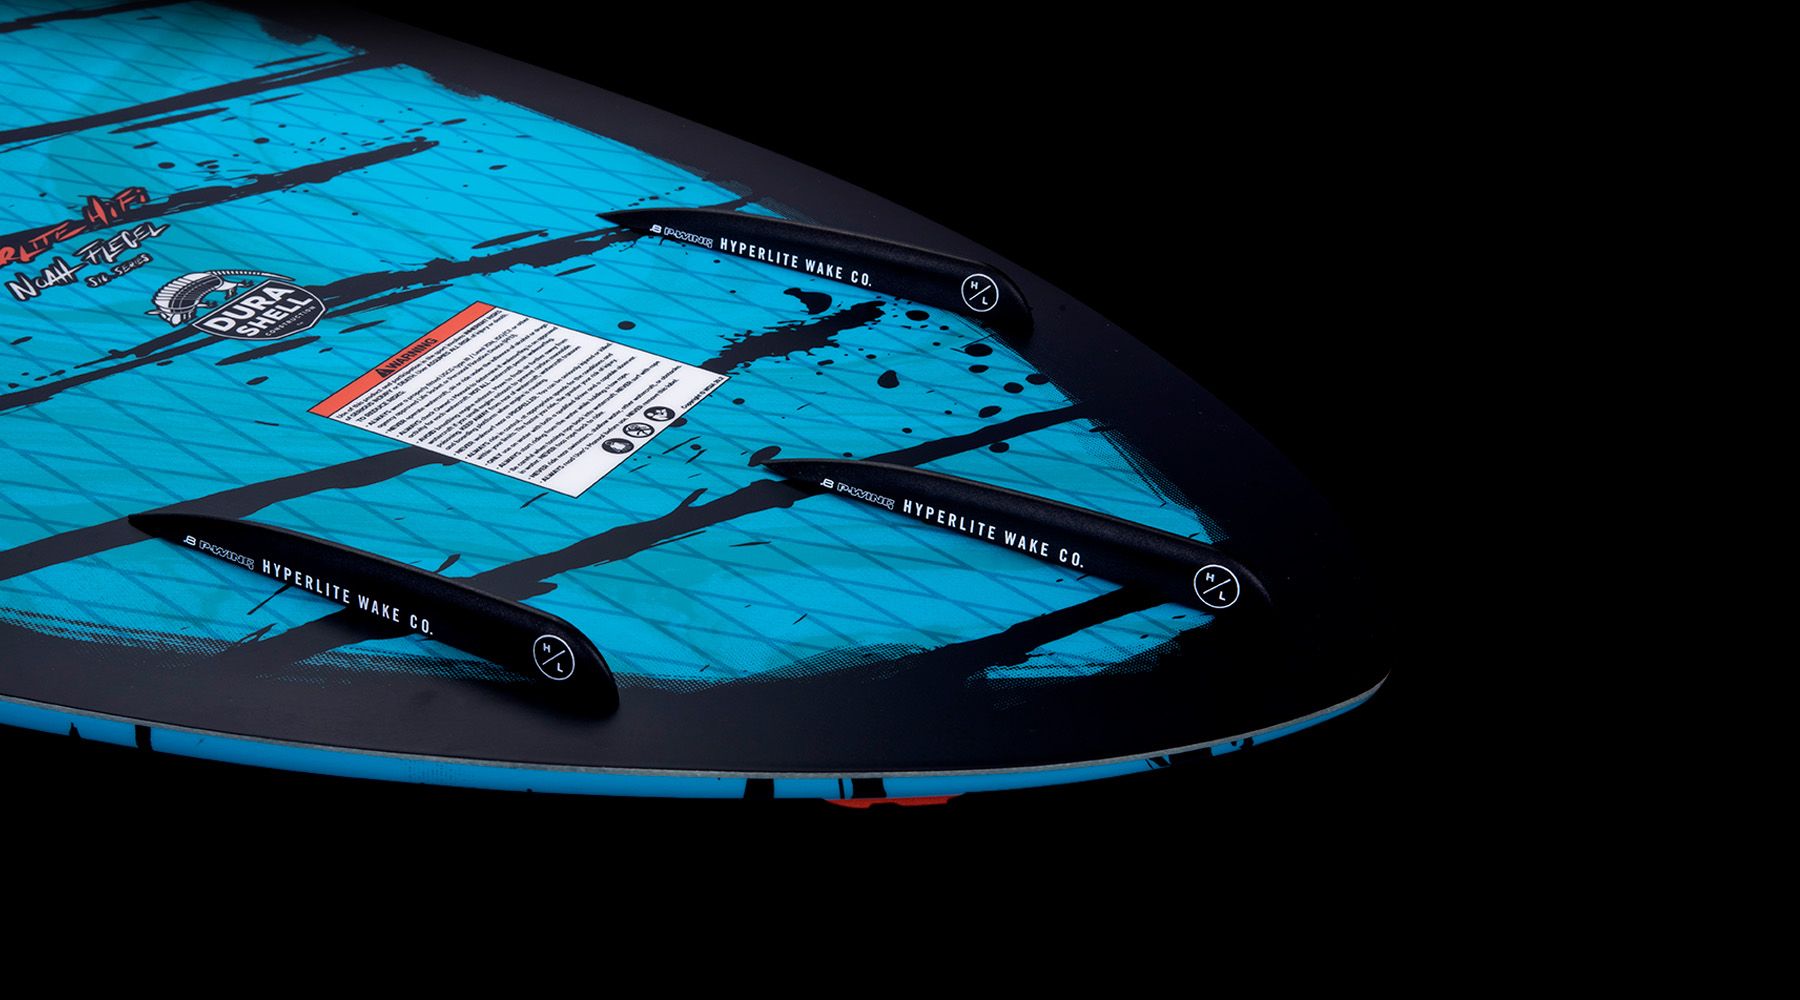 A blue and black Hyperlite 2023 Hi-Fi Wakesurf Board featuring DuraShell construction on a black background.